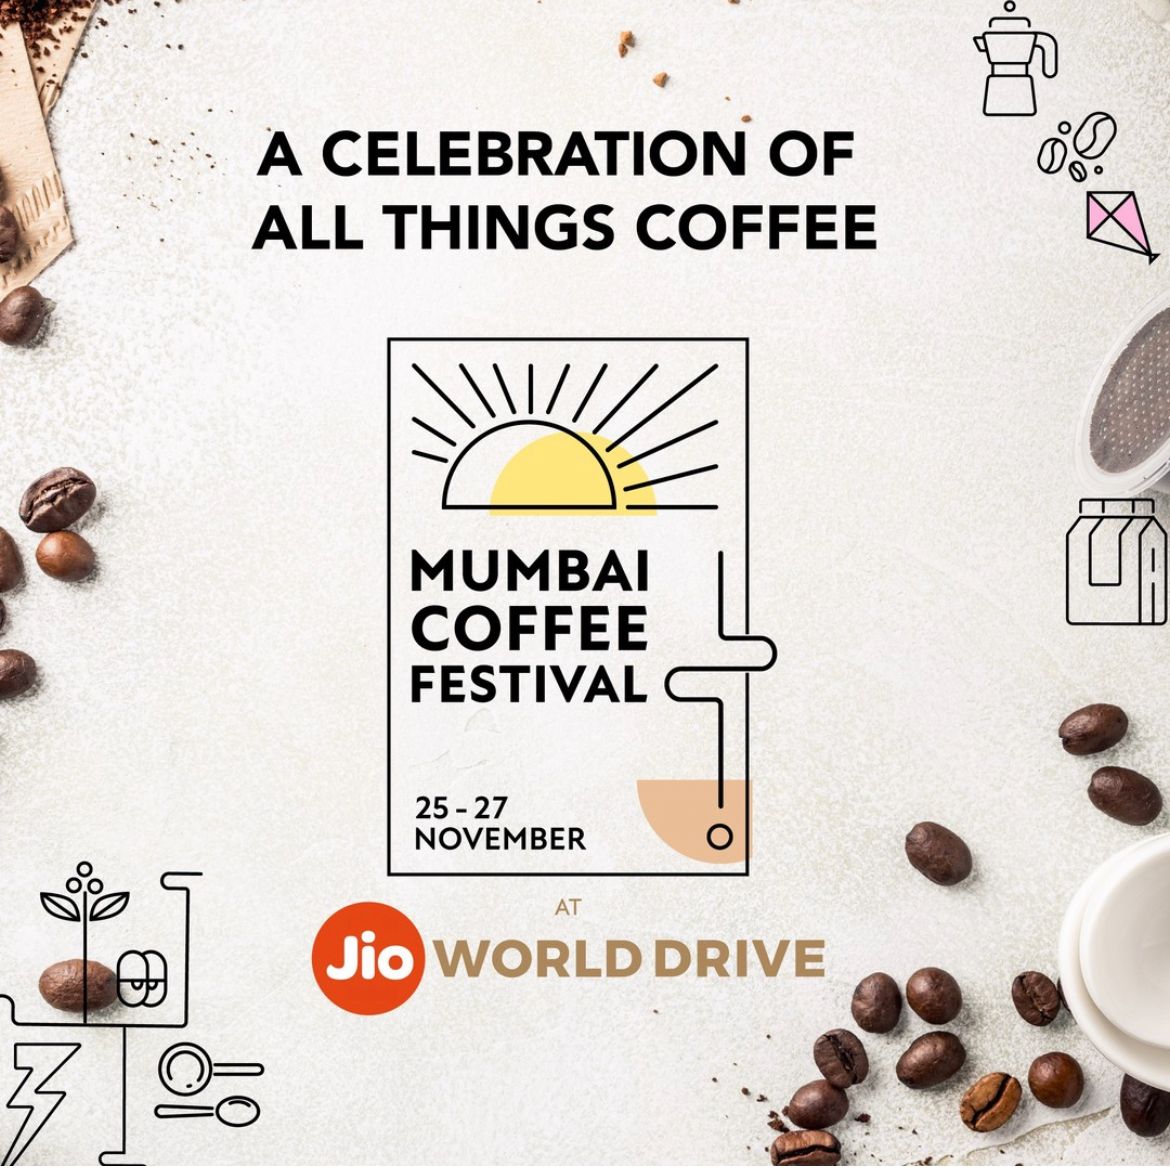 Mumbai coffee festival